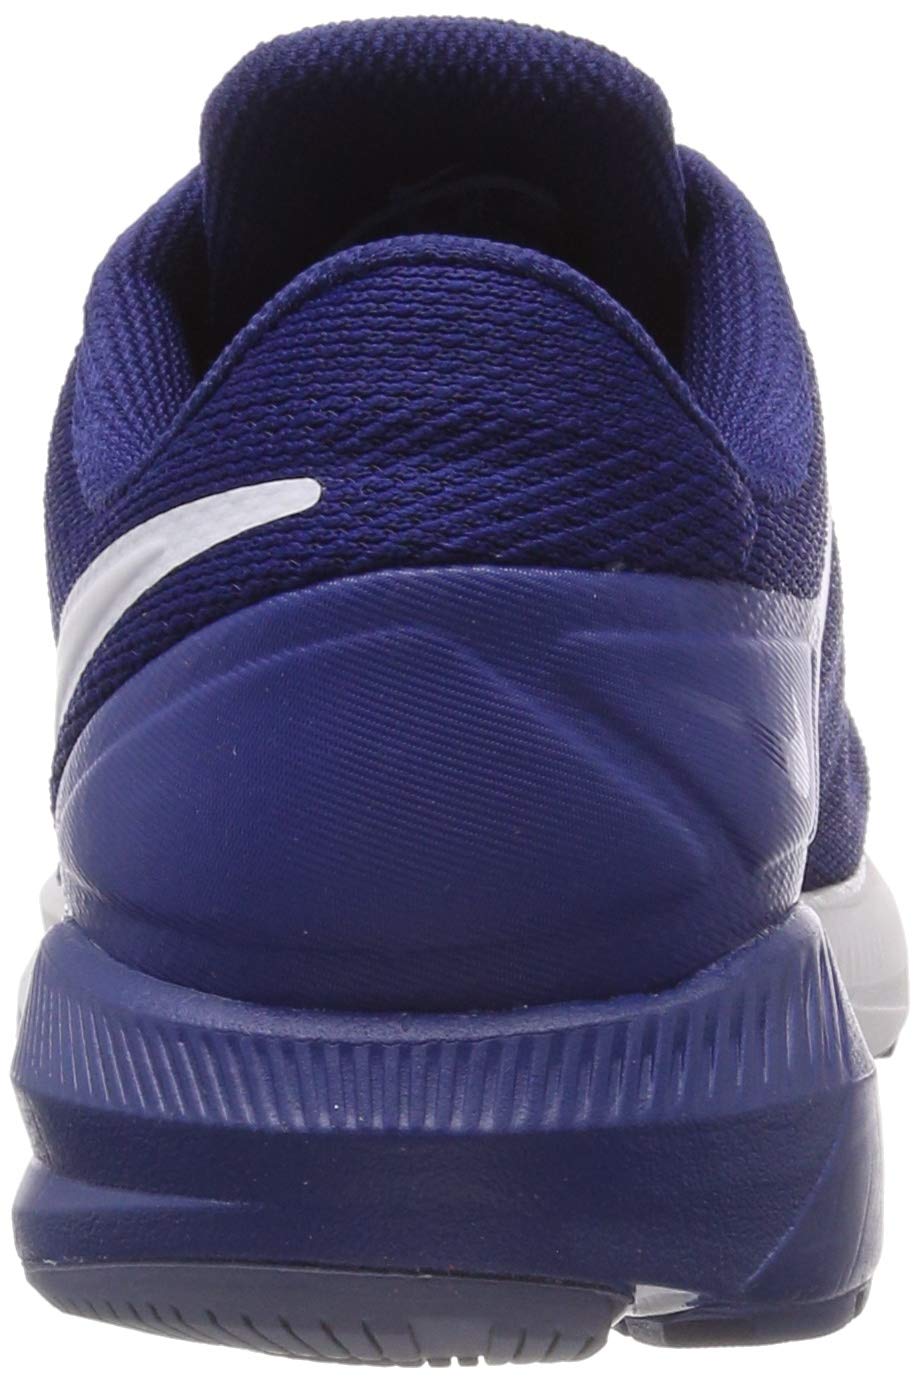 Nike AA1636-404: Men's Air Zoom Structure 22 Blue Void/Vast Grey/Gym Blue Shoe (10.5 D(M) US Men) - image 3 of 7